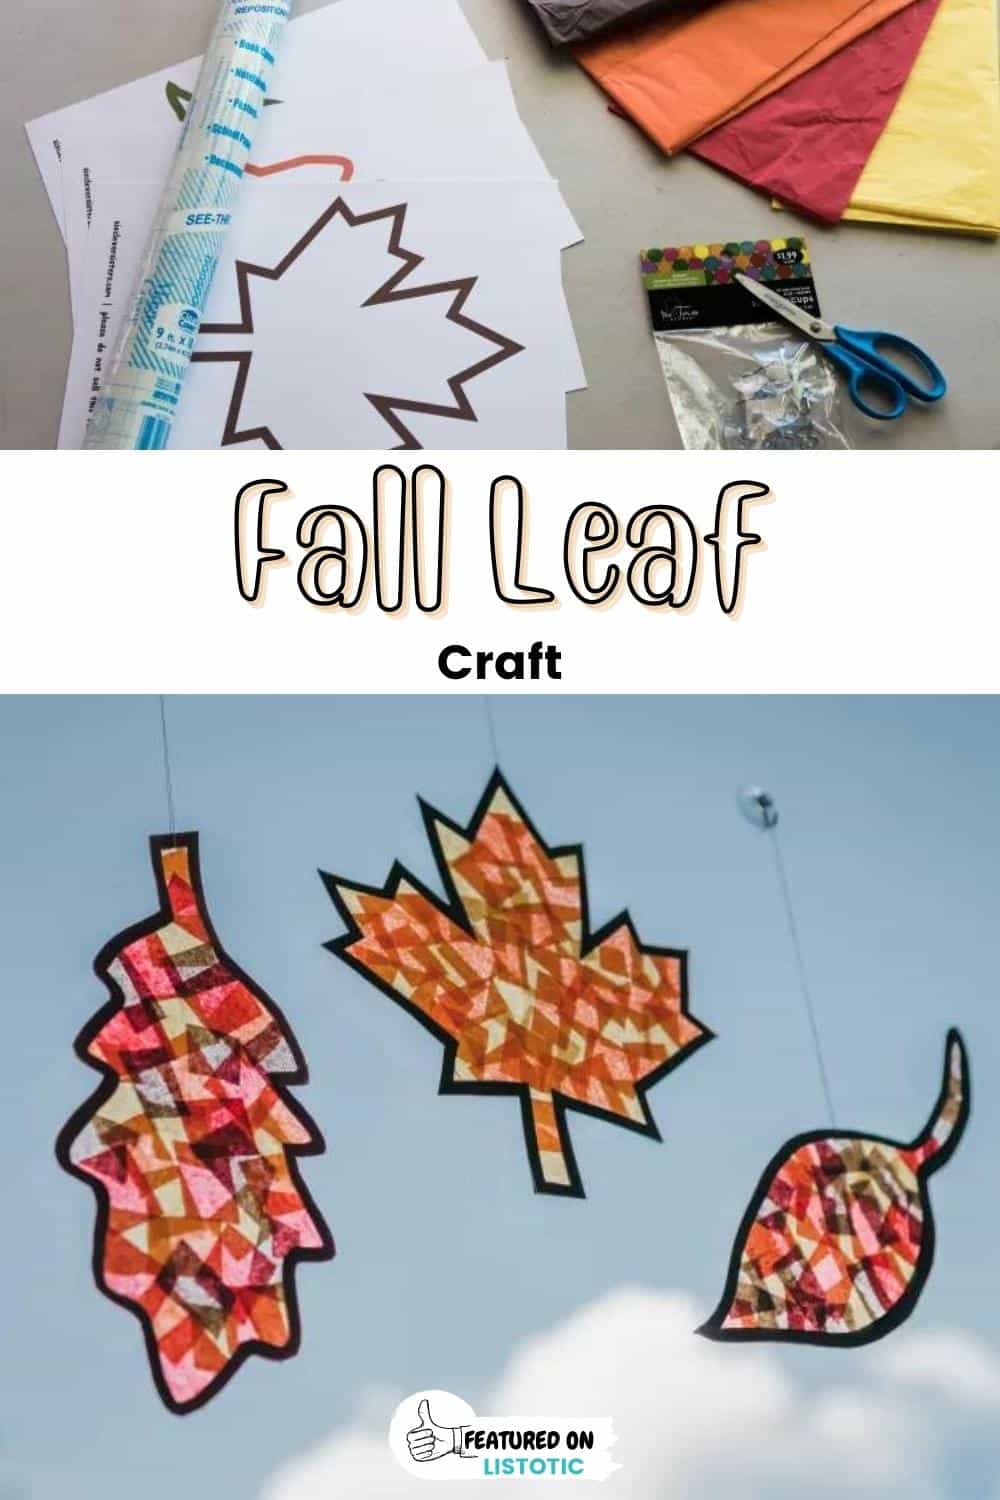 Crafts for kids.